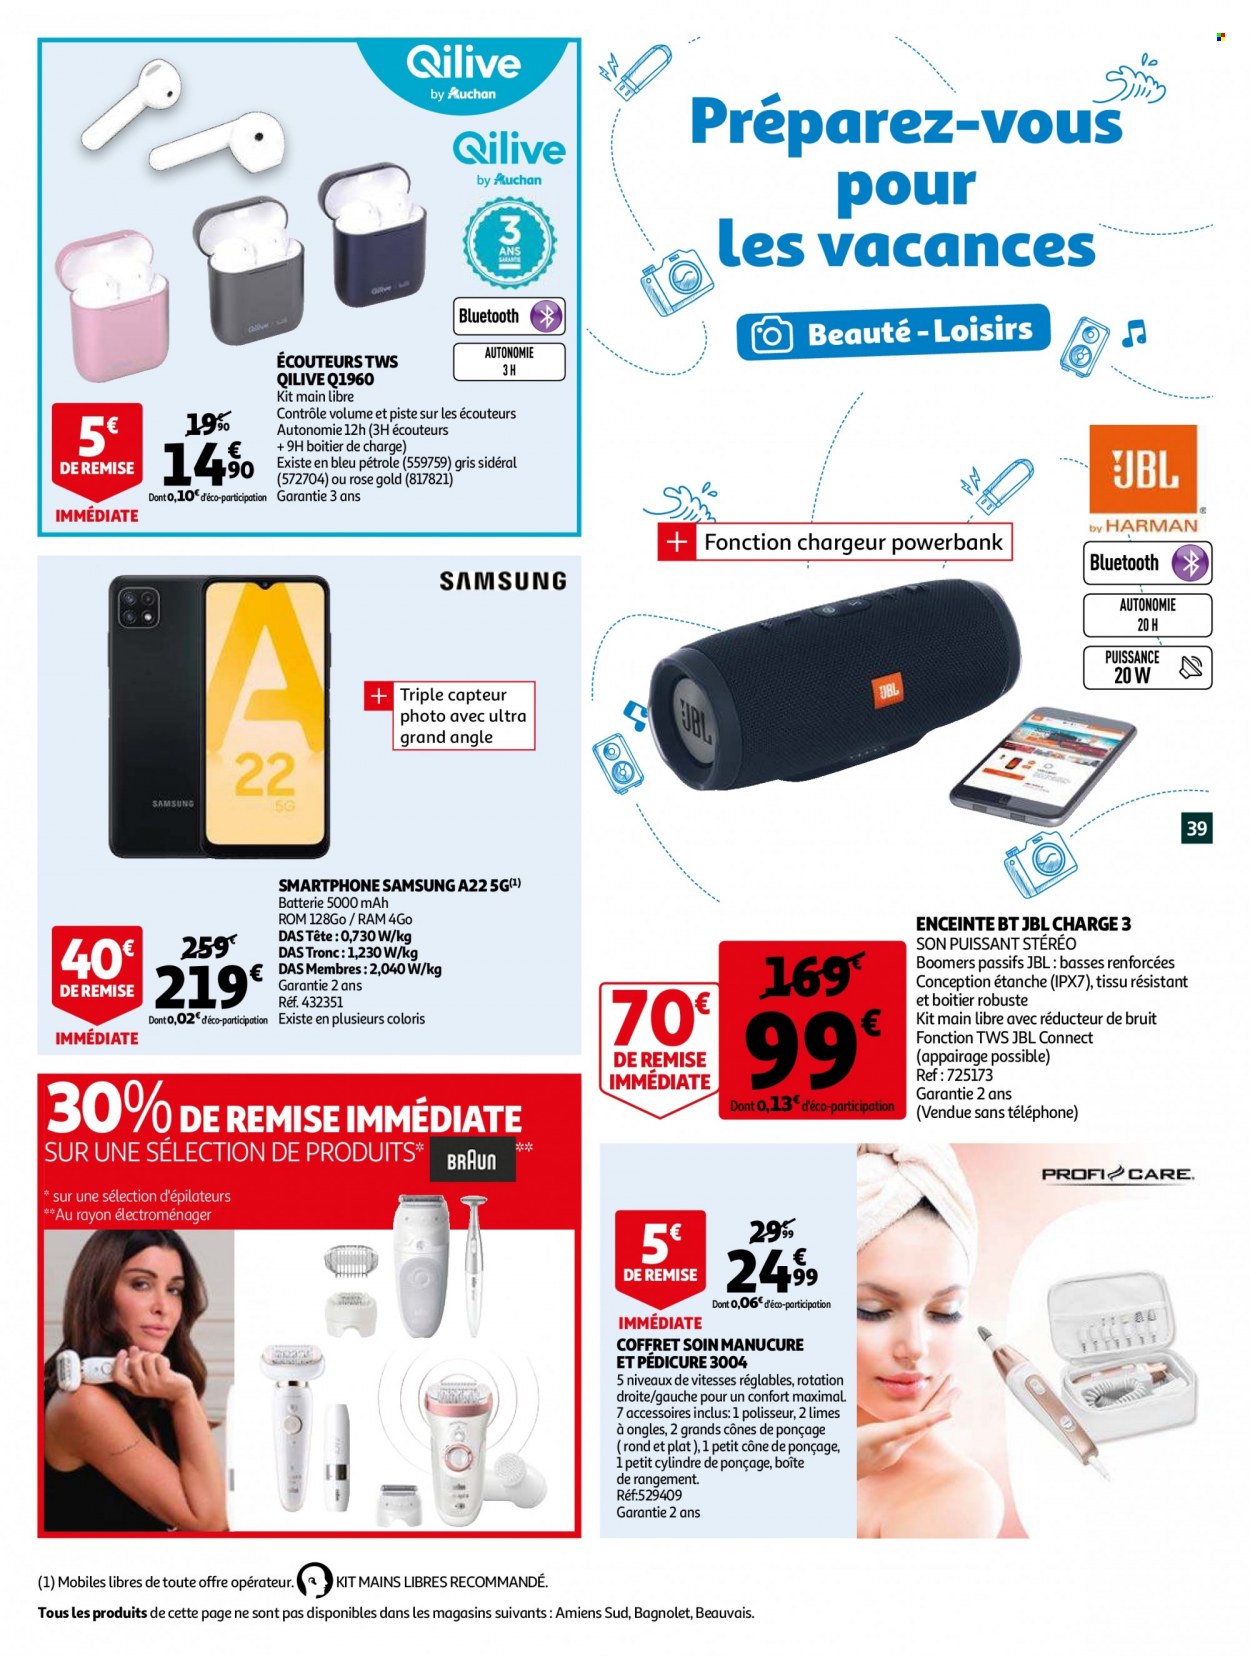 Catalogue Auchan - 29.06.2022 - 05.07.2022. 